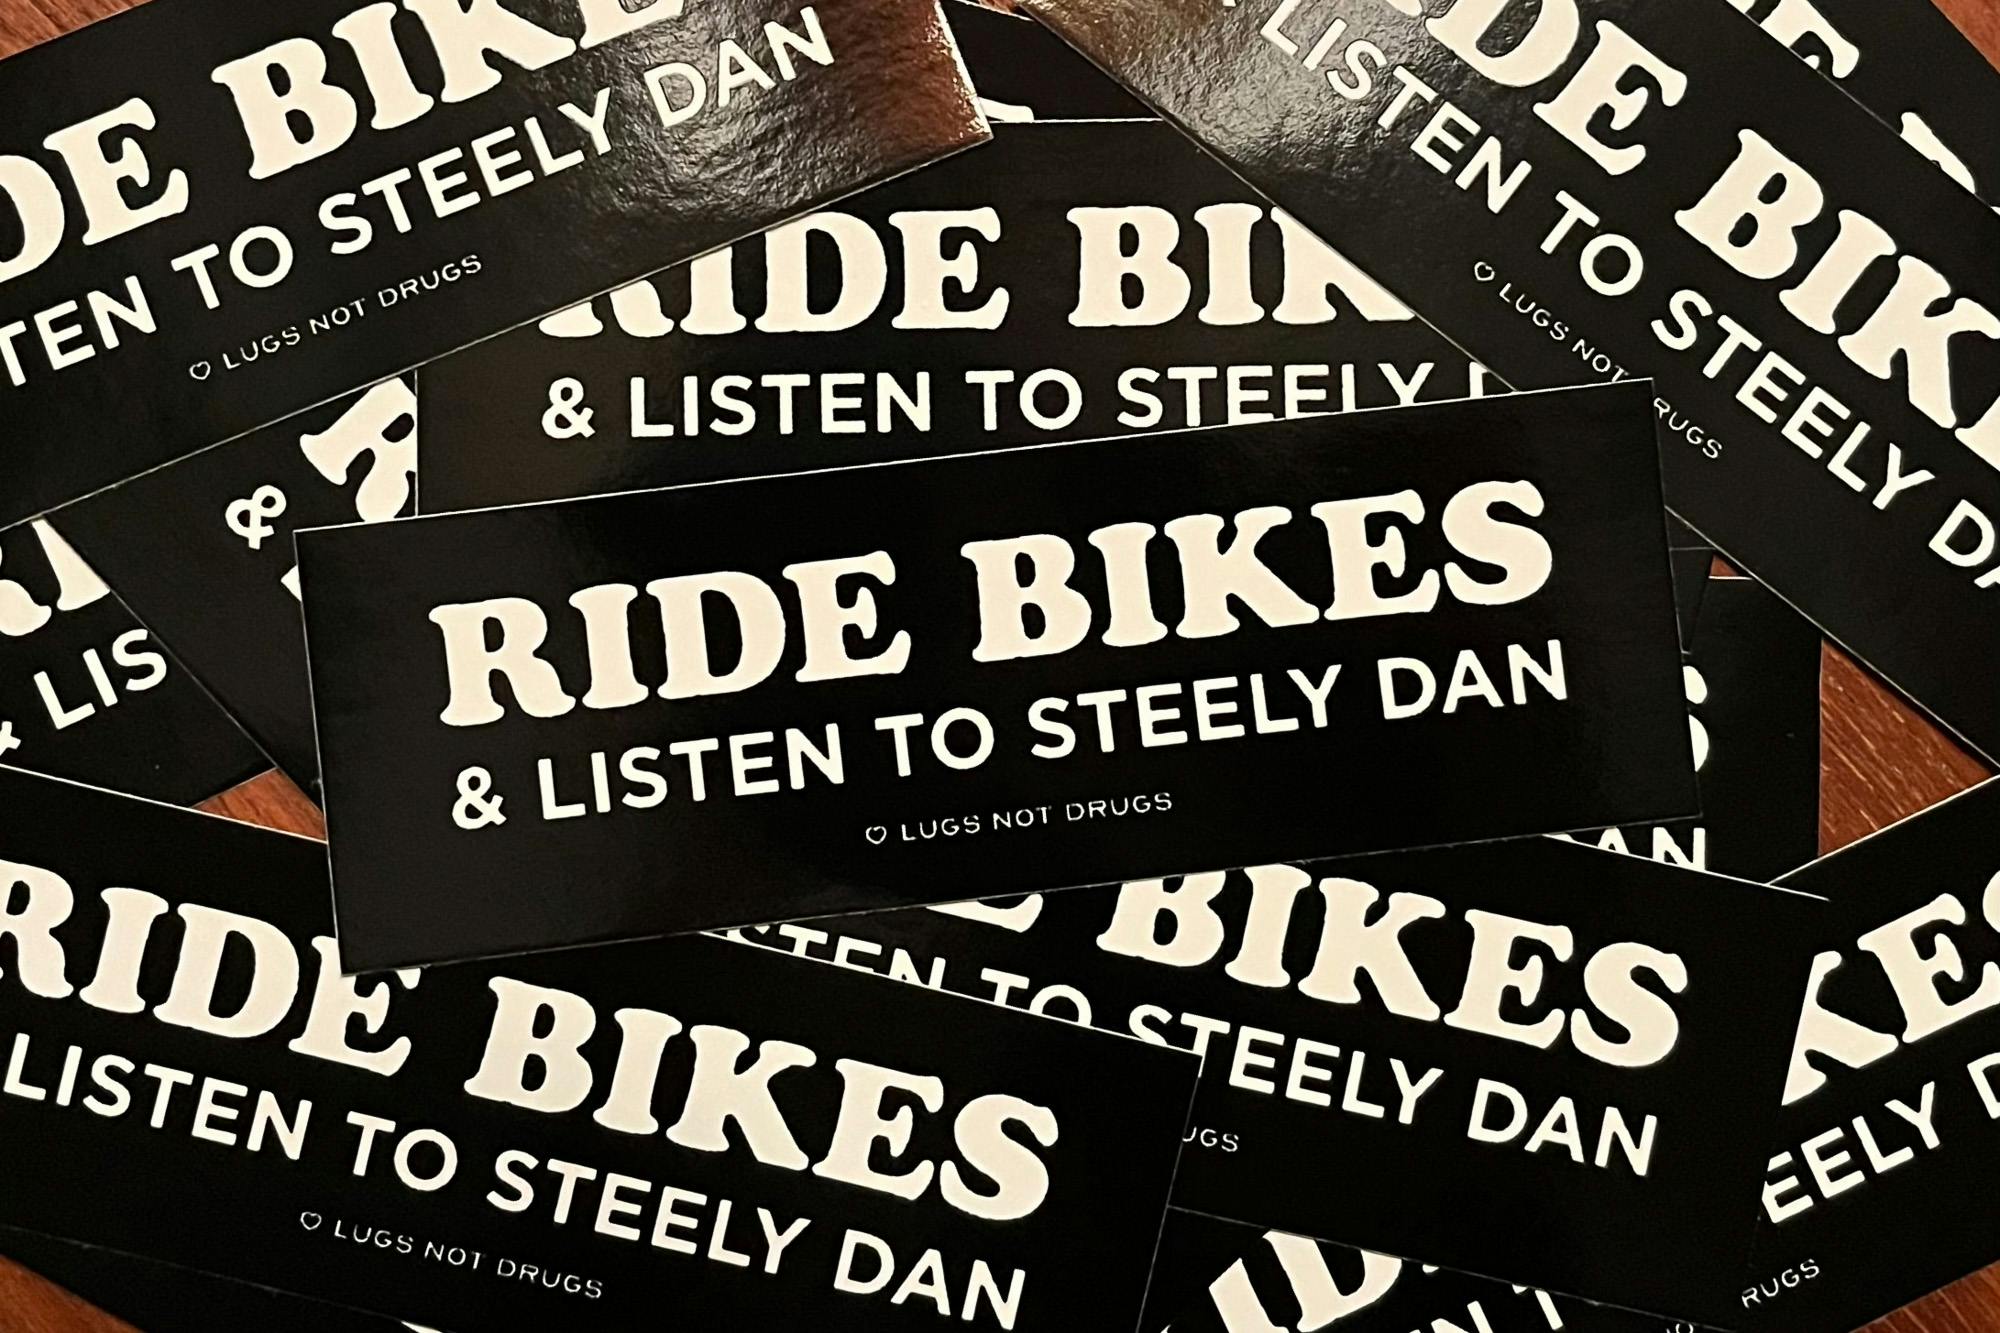 Ride Bikes and Listen to Steely Dan sticker.